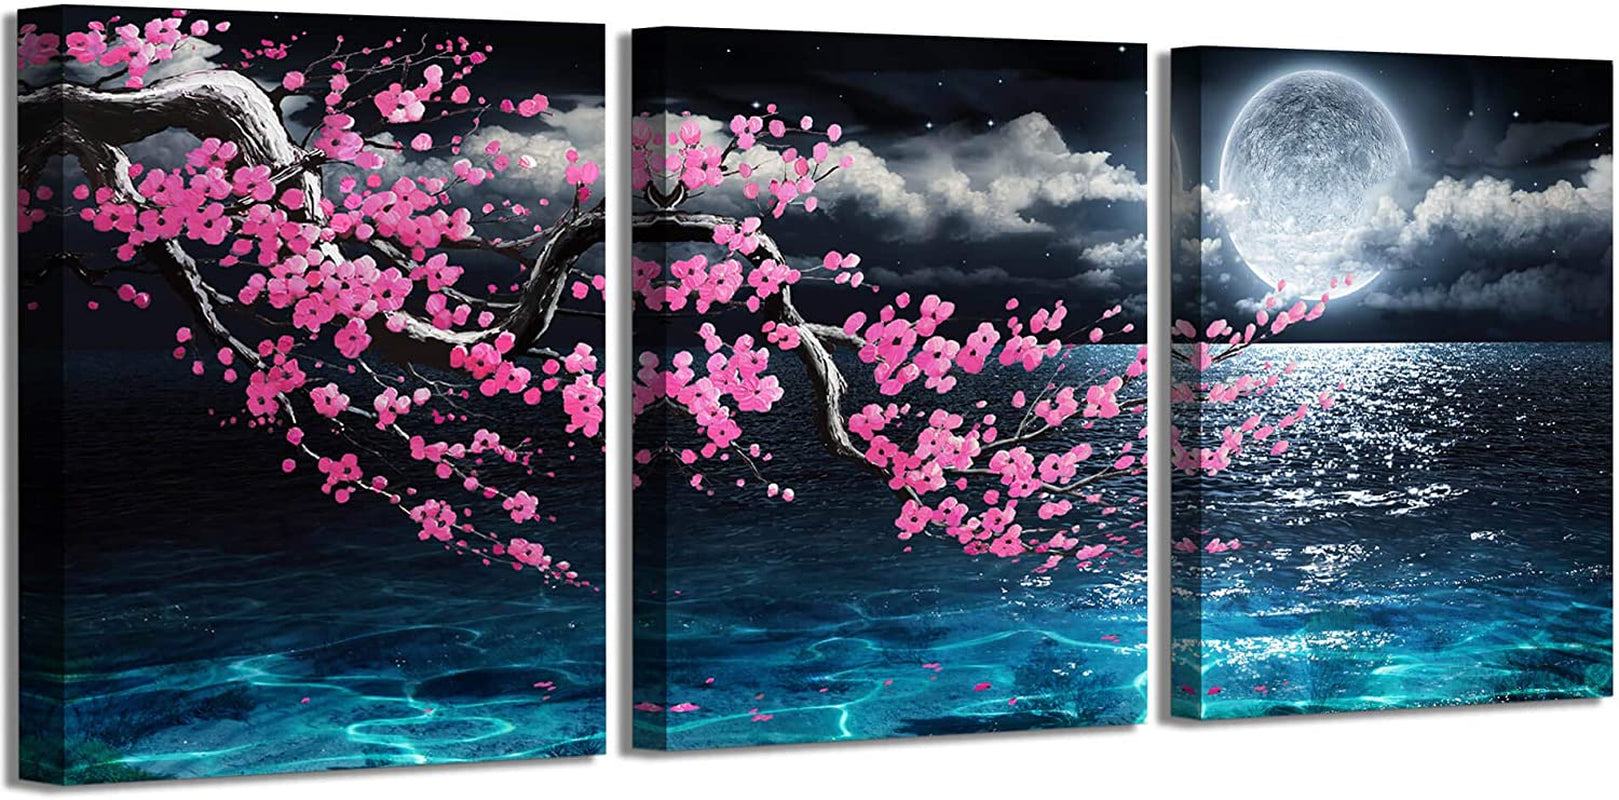 Plum Blossom Moon Ocean Art Prints Wall Decor 3 Pieces Size 12X16 Each Panel